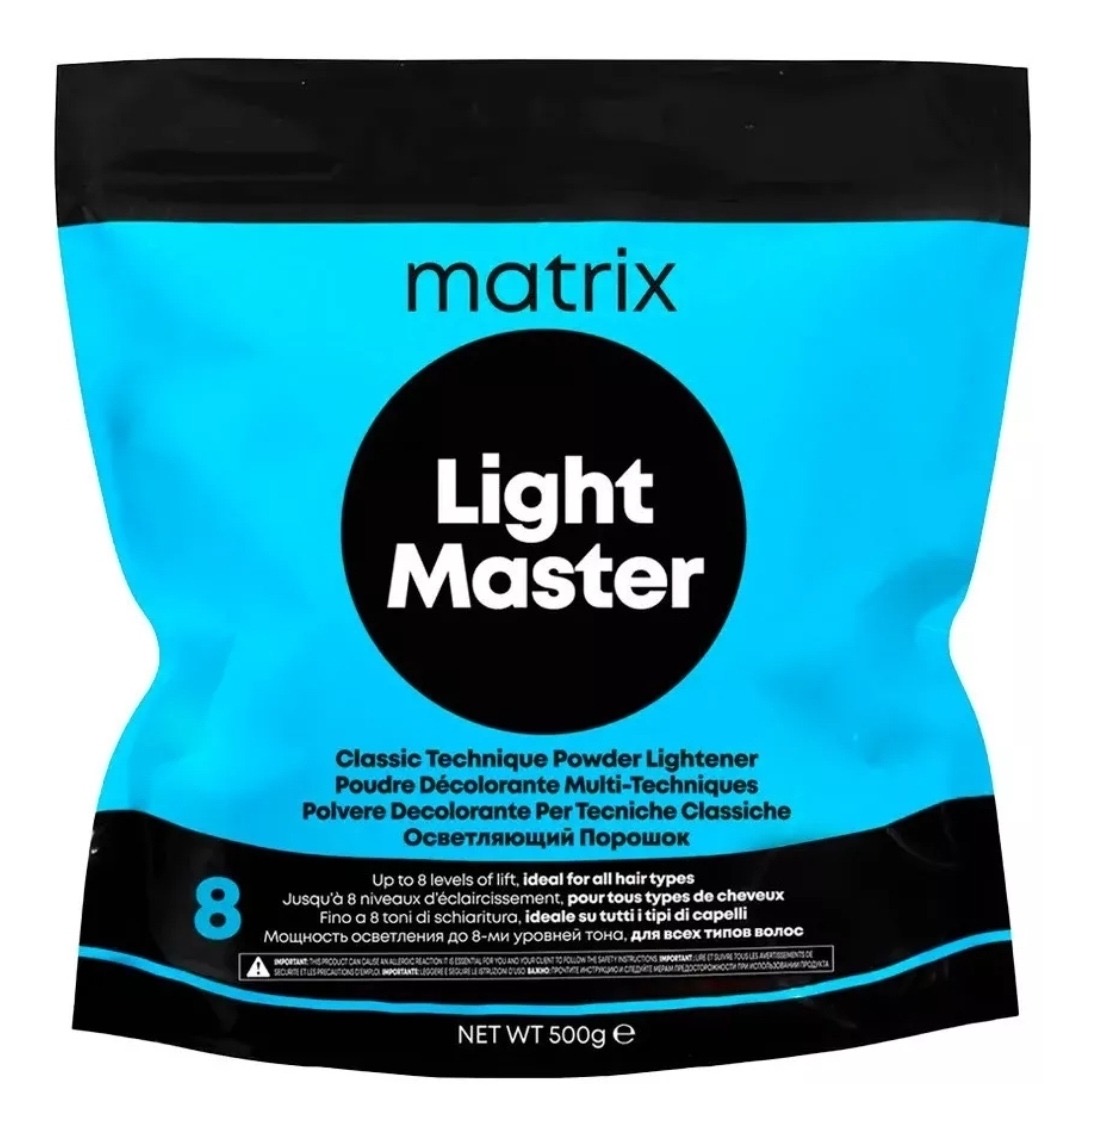 Decolorante Matrix Light Master 500g